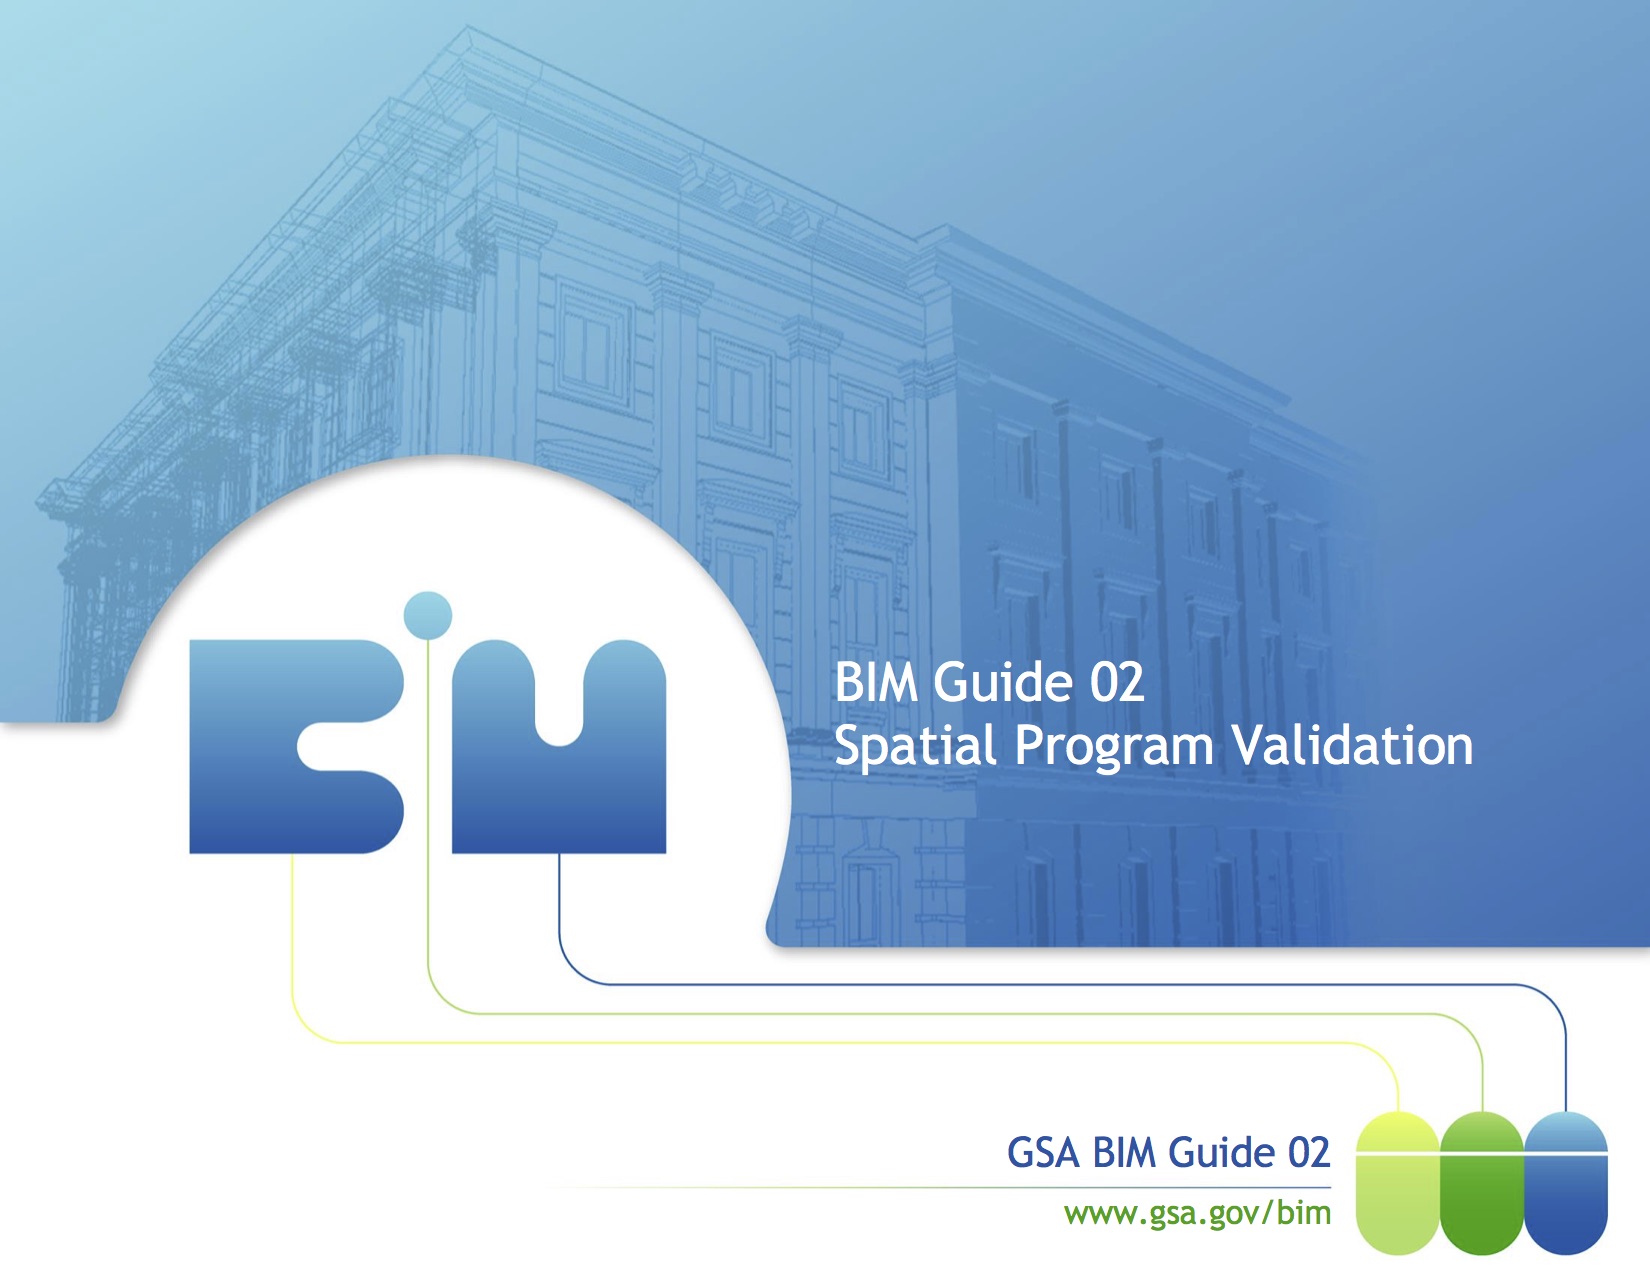 BIM Guide 02 Image